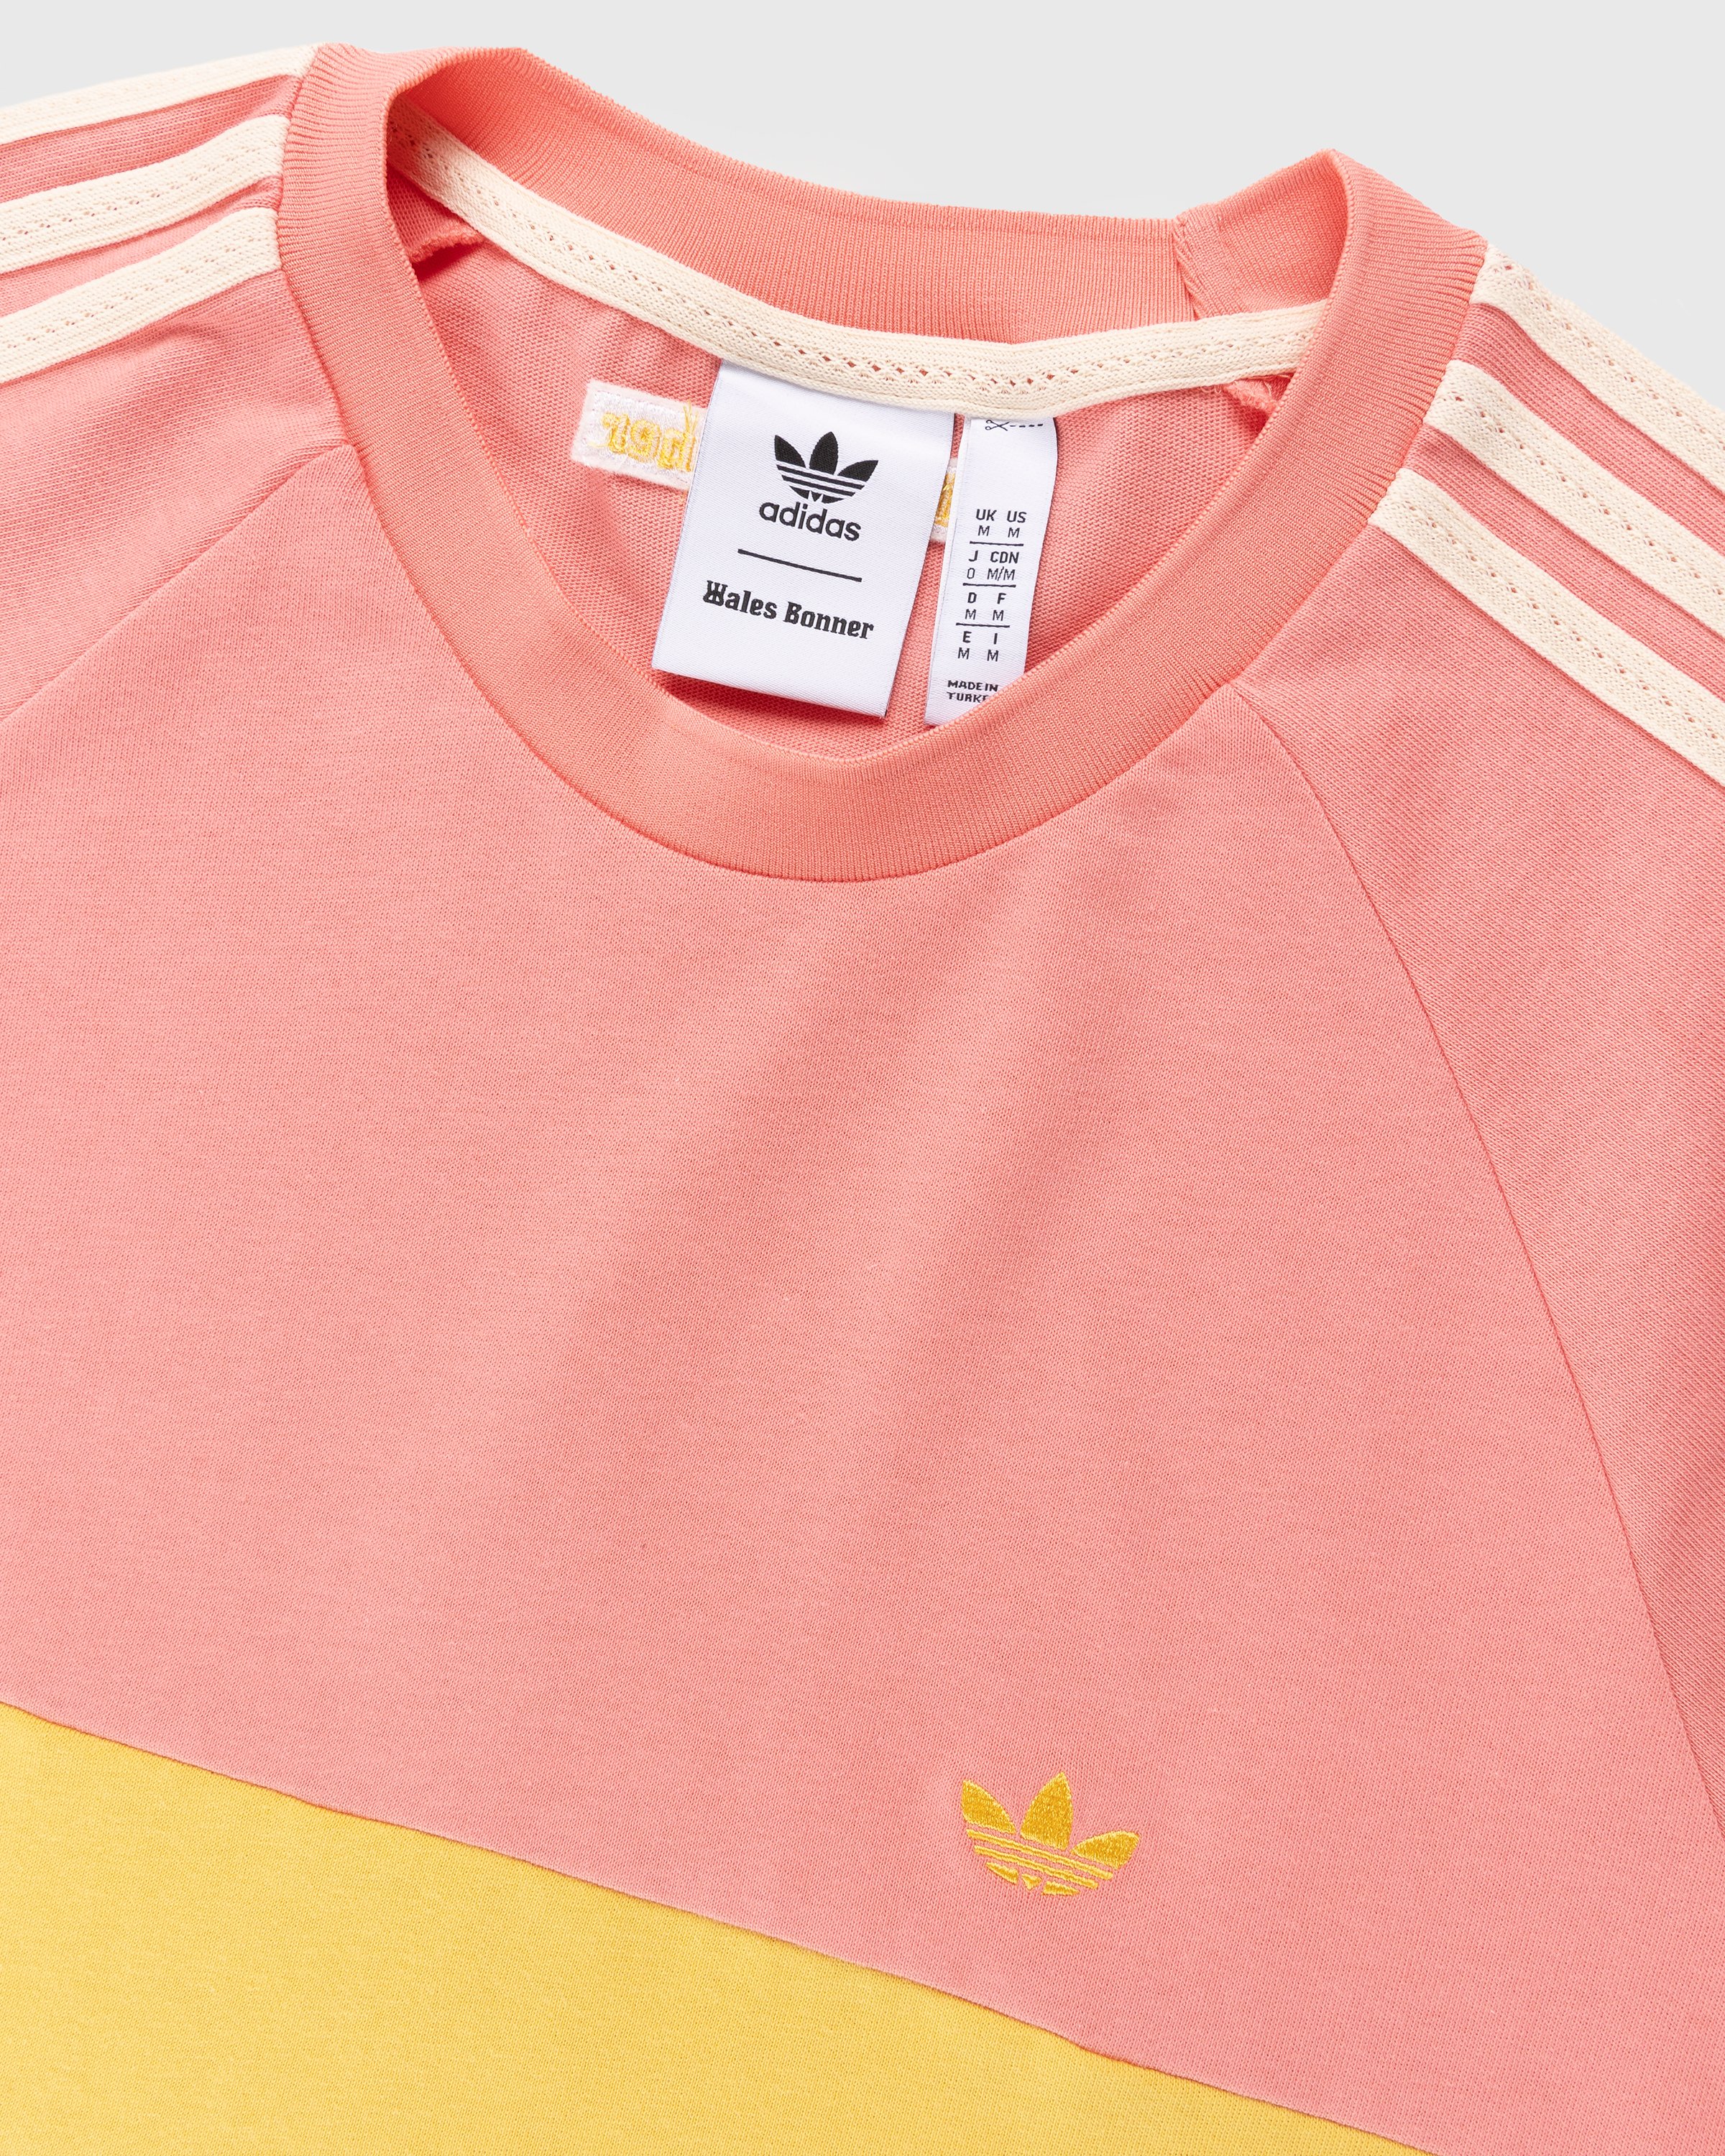 Adidas x Wales Bonner - WB Tee Tactile Rose - Clothing - Pink - Image 5